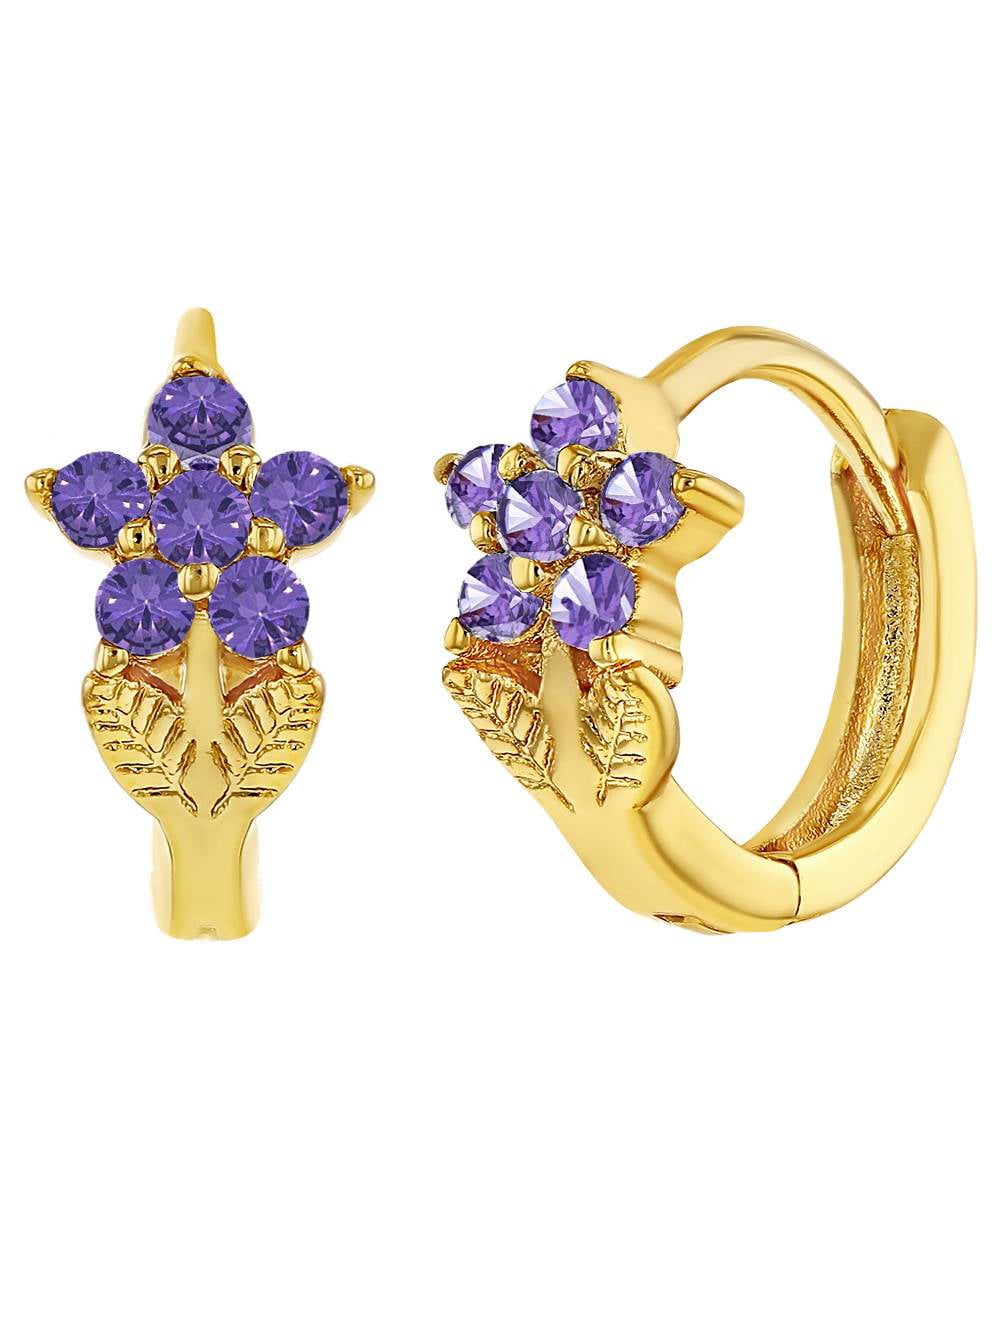 10mm Choose Size 2mm Round Purple Lavender CZ 10K Yellow Gold Stud Earrings